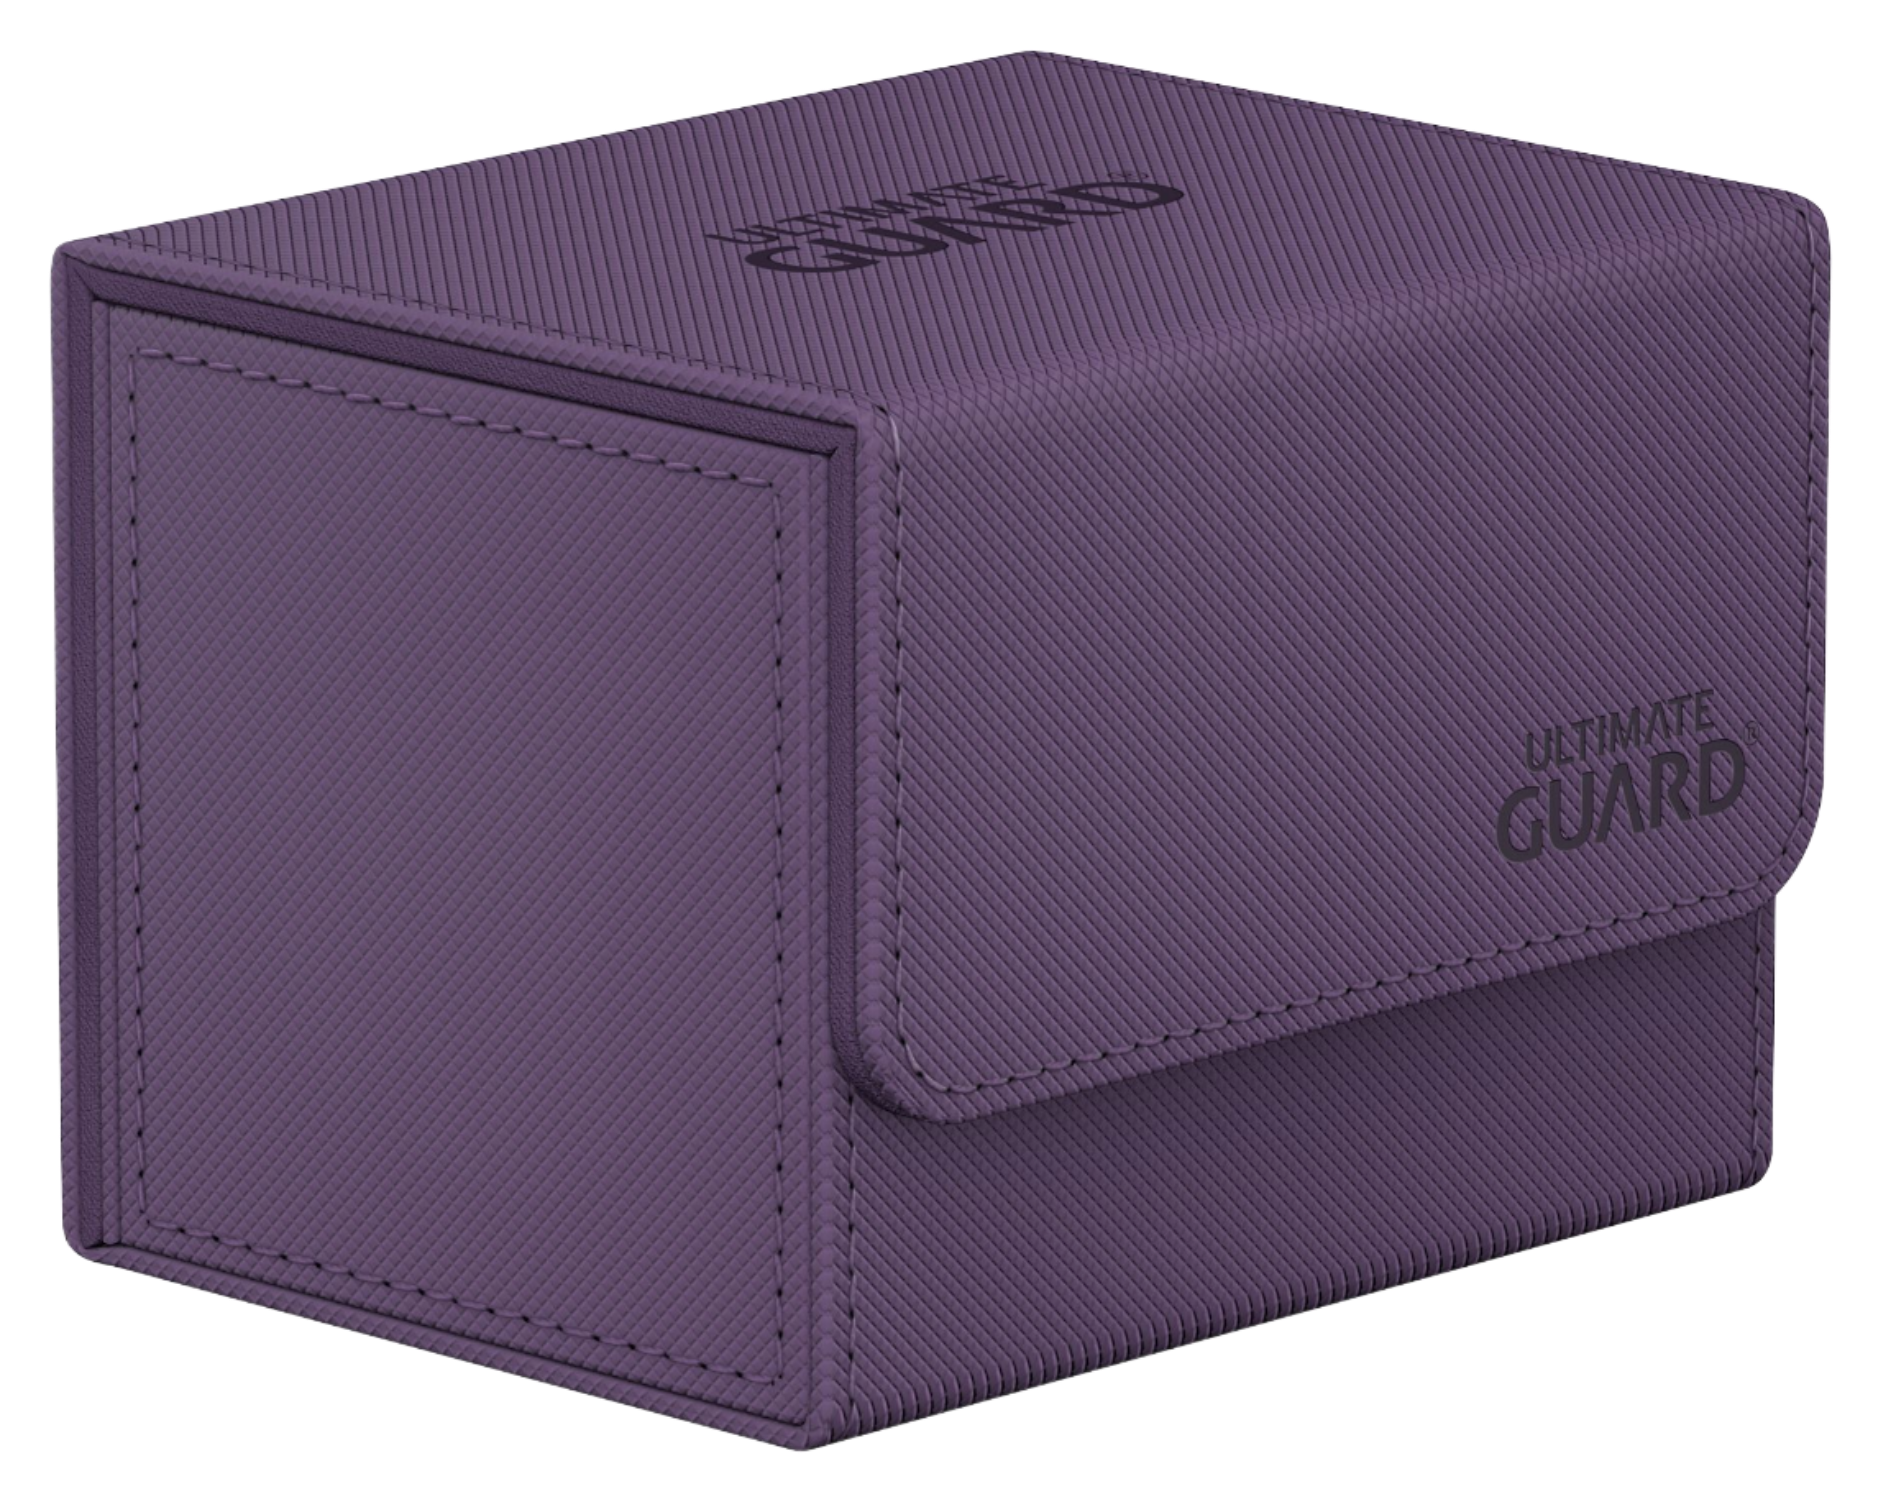 Ultimate Guard - Sidewinder XenoSkin - 100+ Deck Case - Monocolor Purple